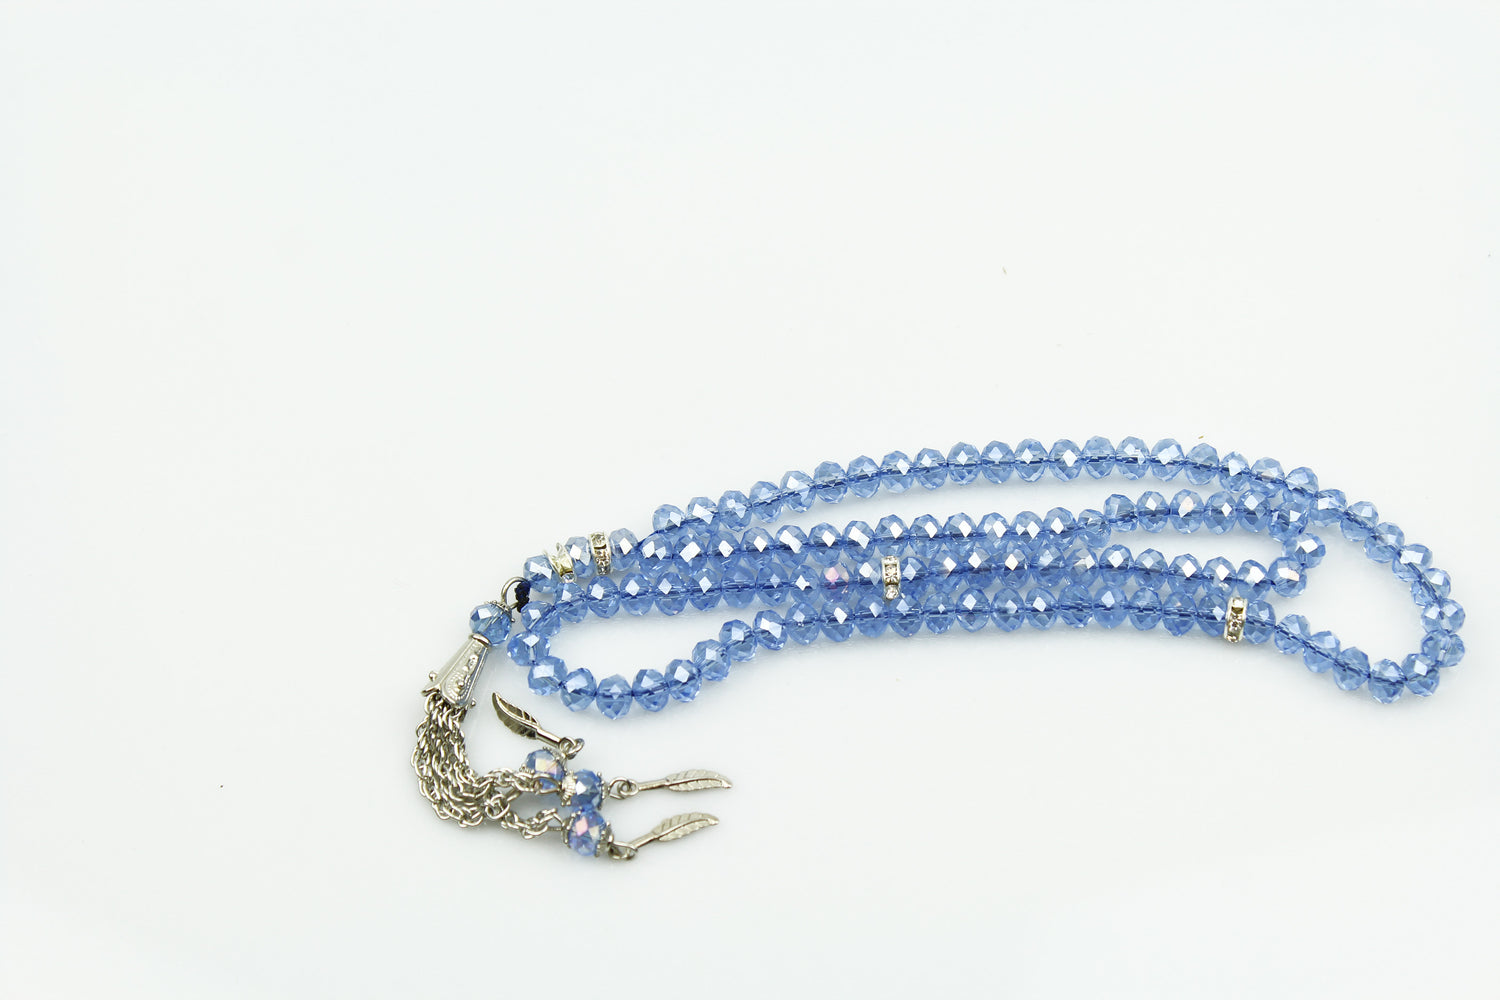 light blue crystal tasbeeh with 99 beads